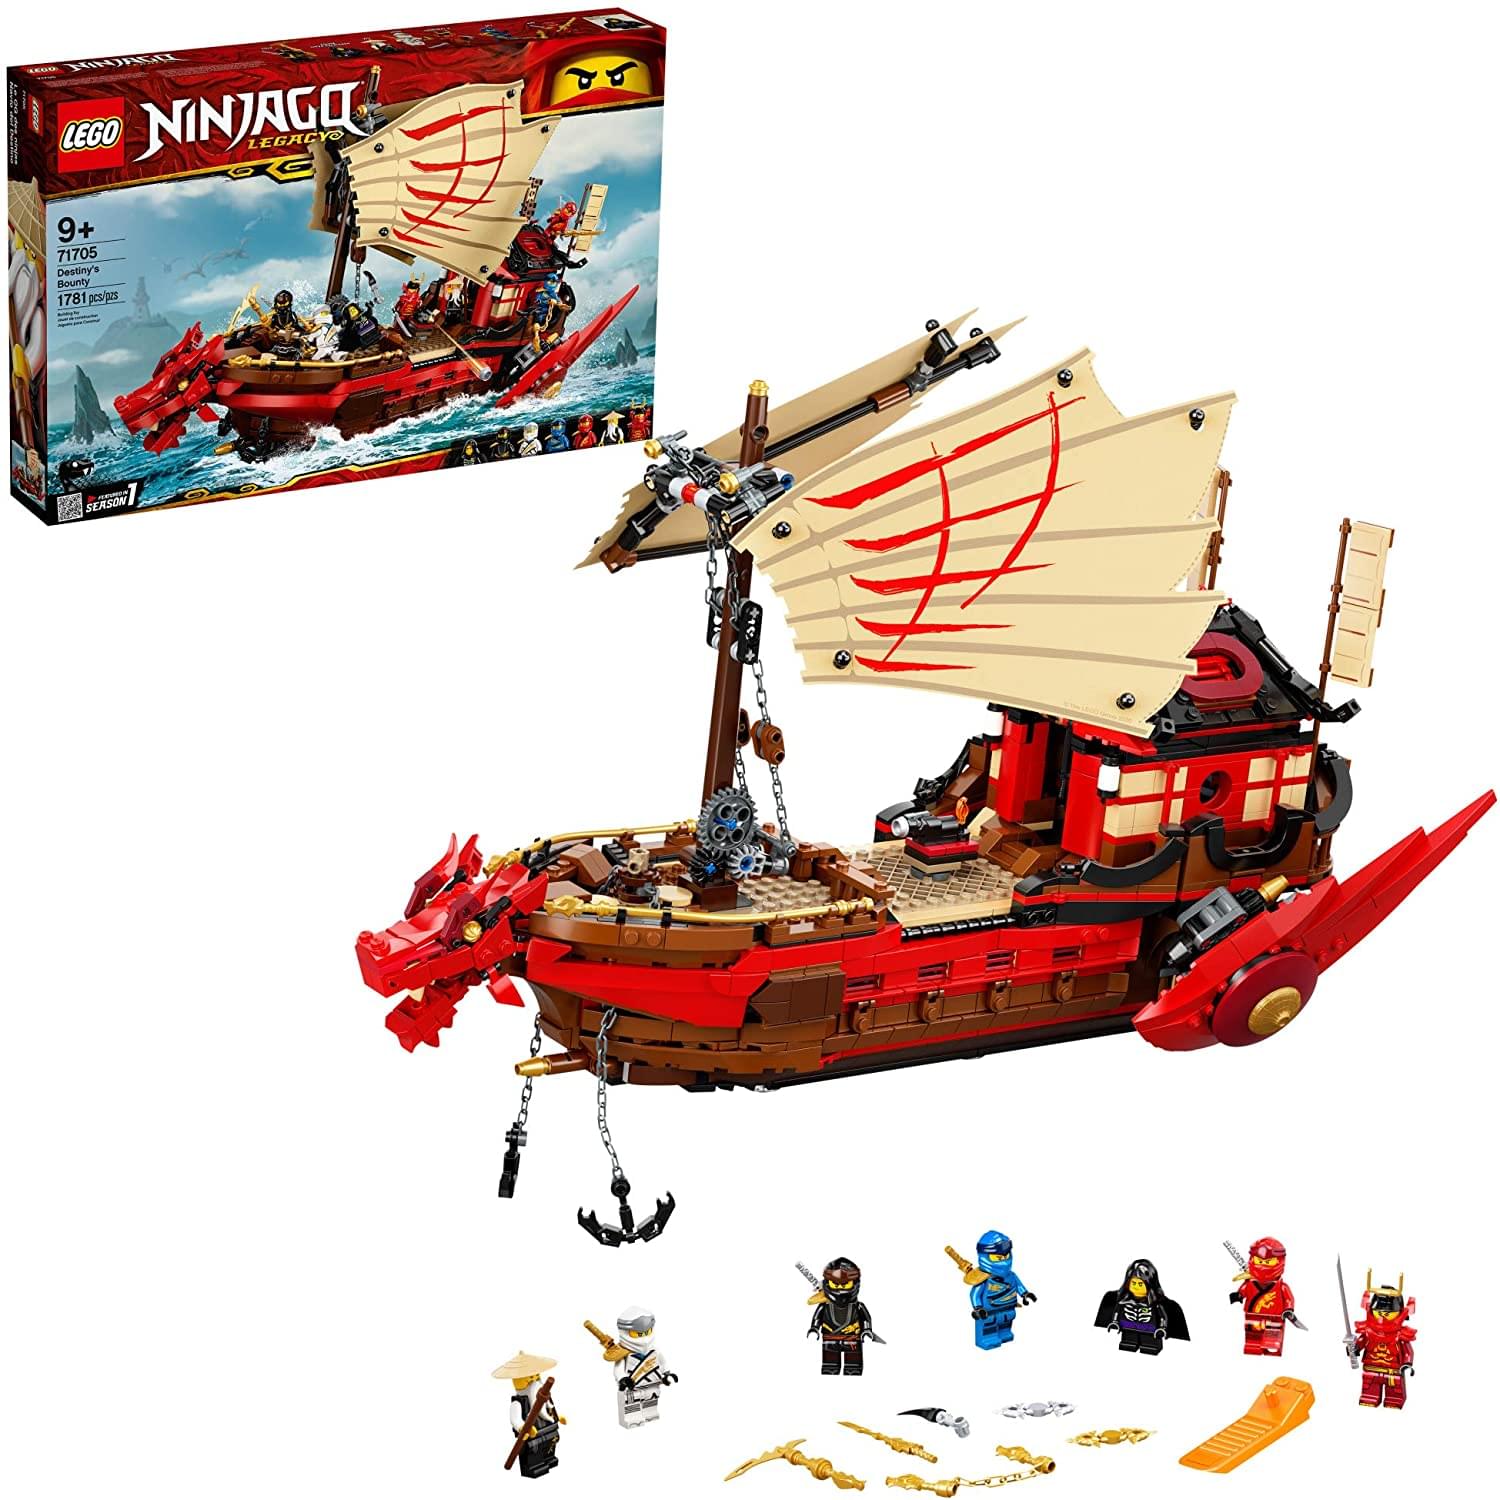 LEGO Ninjago 71705 Destinys Bounty 1781 Piece Building Set